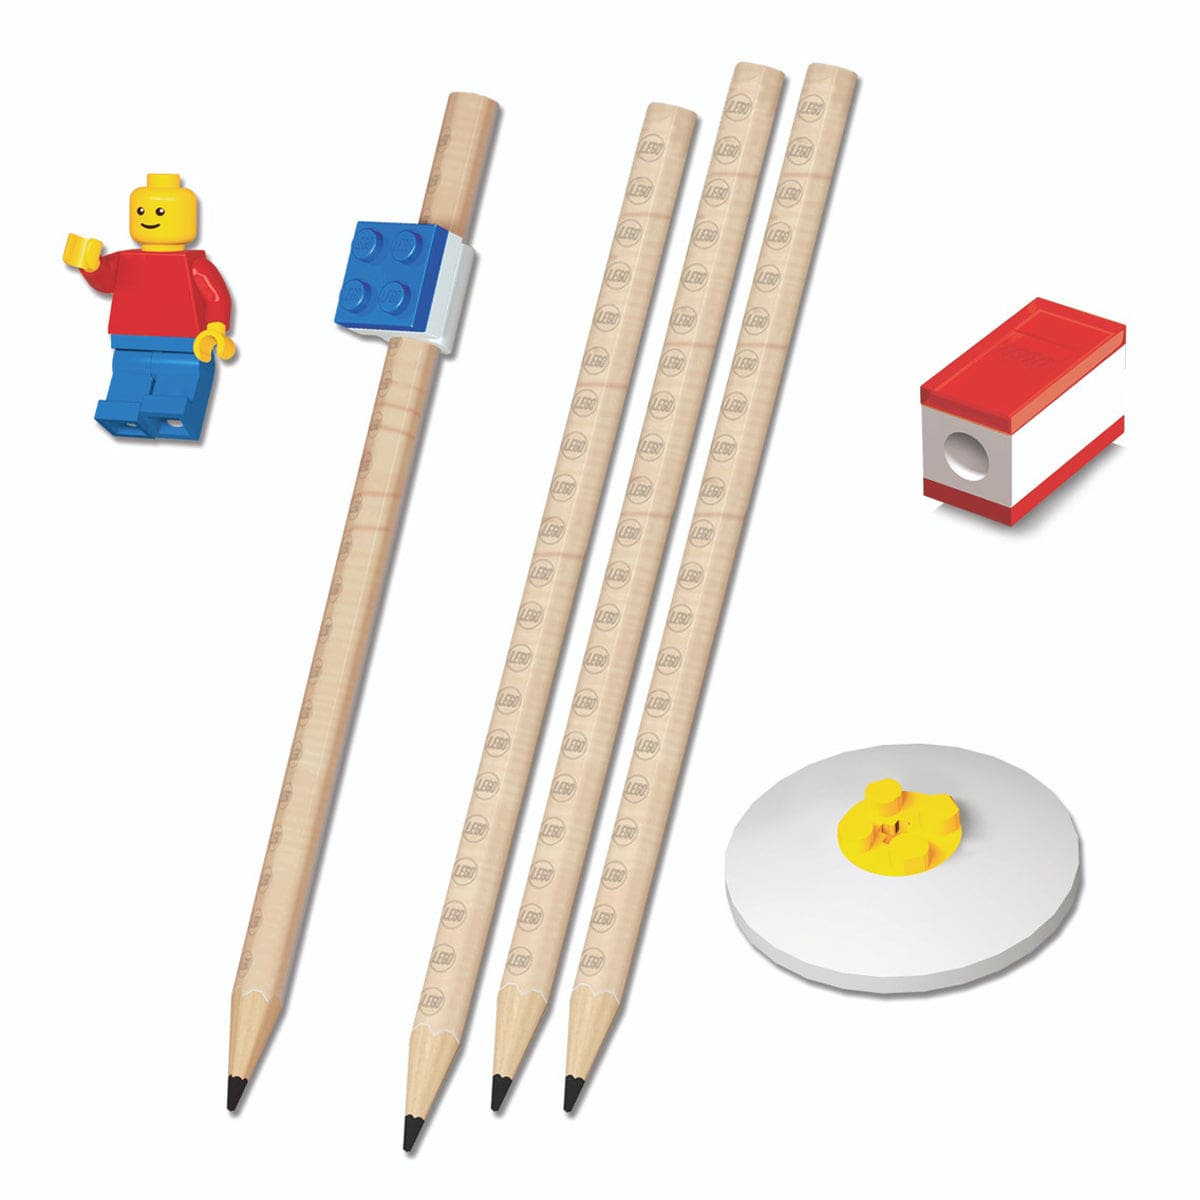 LEGO Stationery Set with Minifigure - The Pi Hut